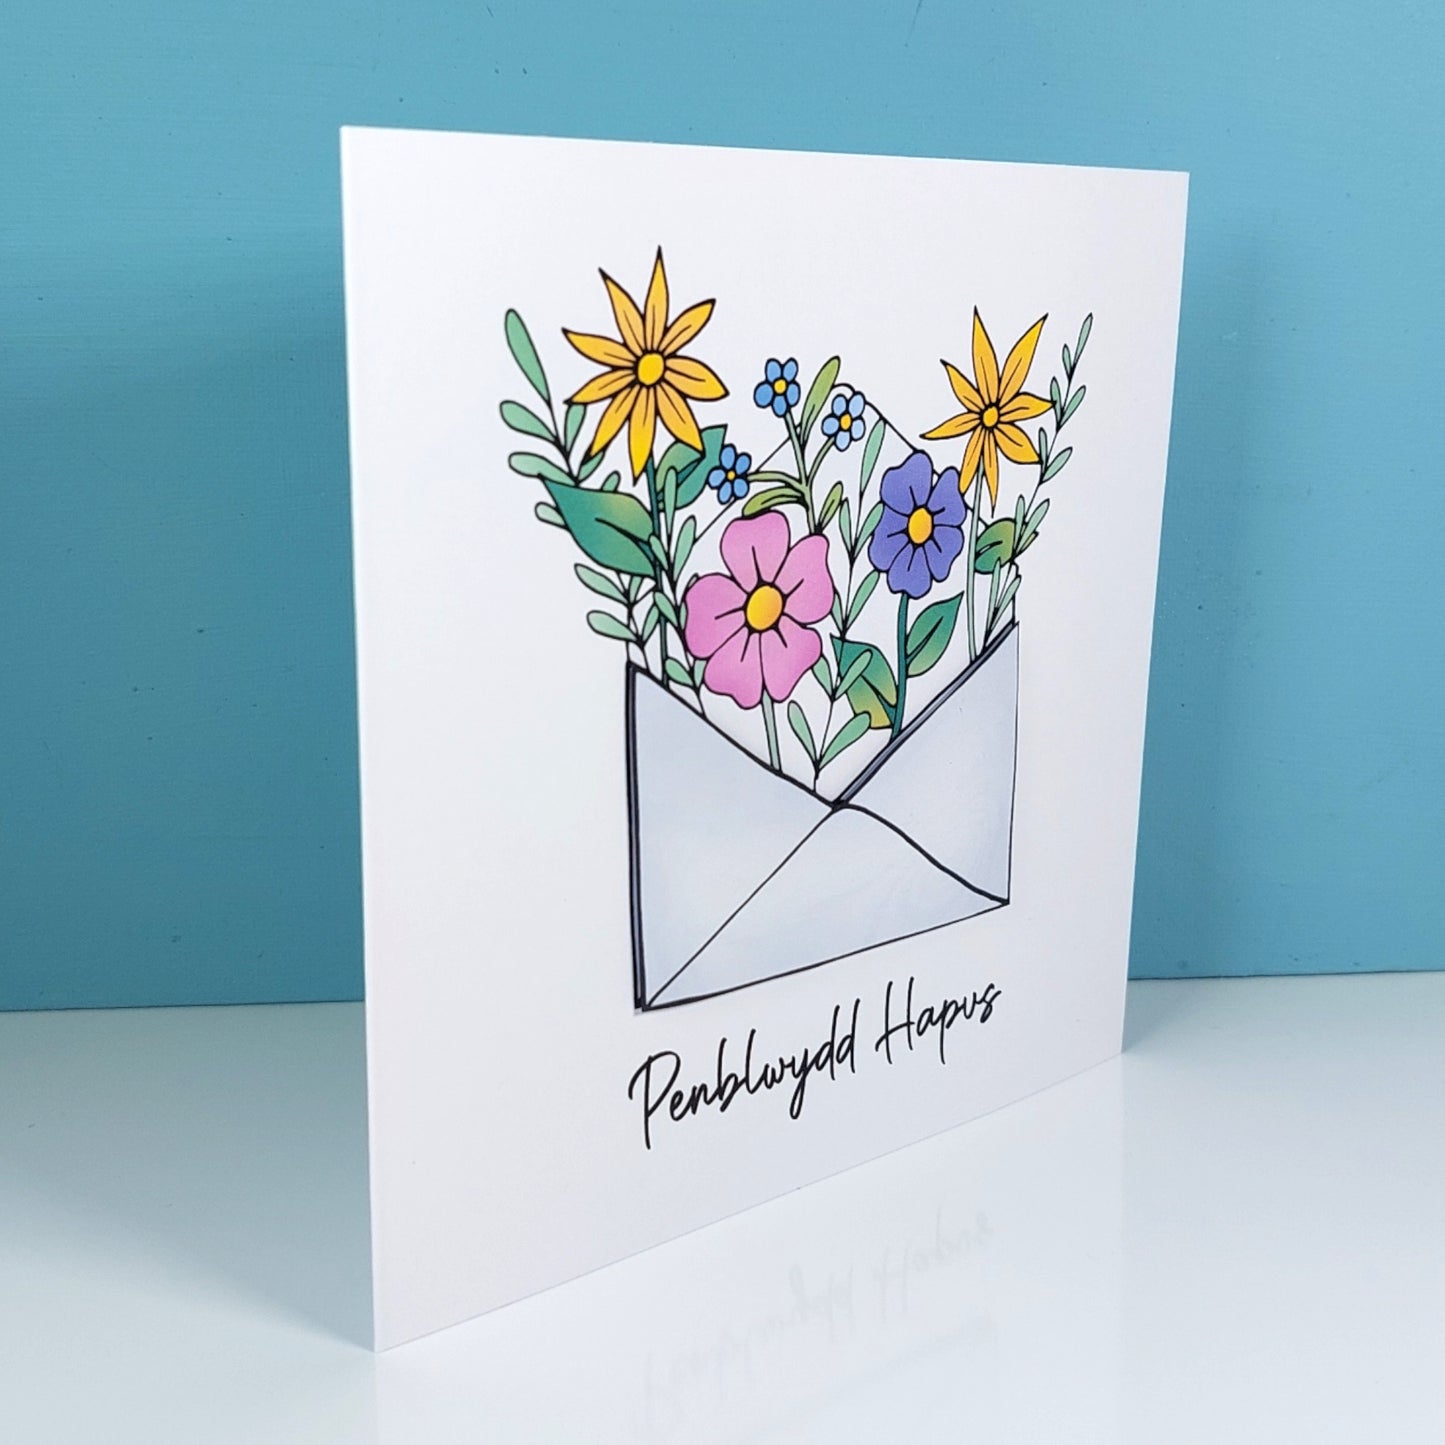 Flower Envelope Penblwydd Hapus (Birthday Card) Welsh Card